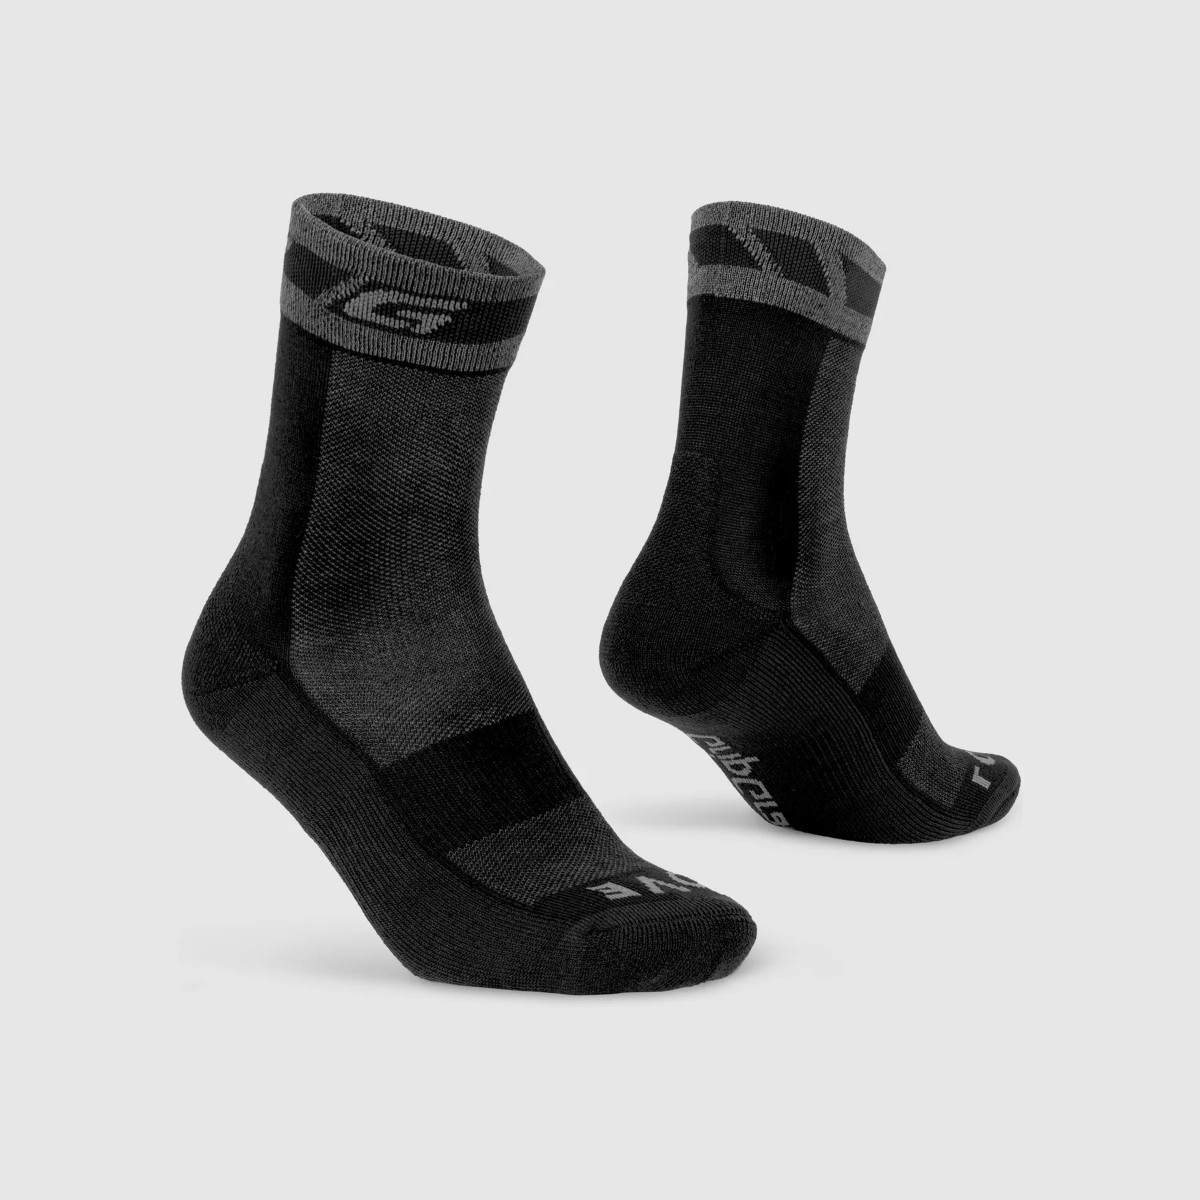 GripGrab Merino Winter Socks product image